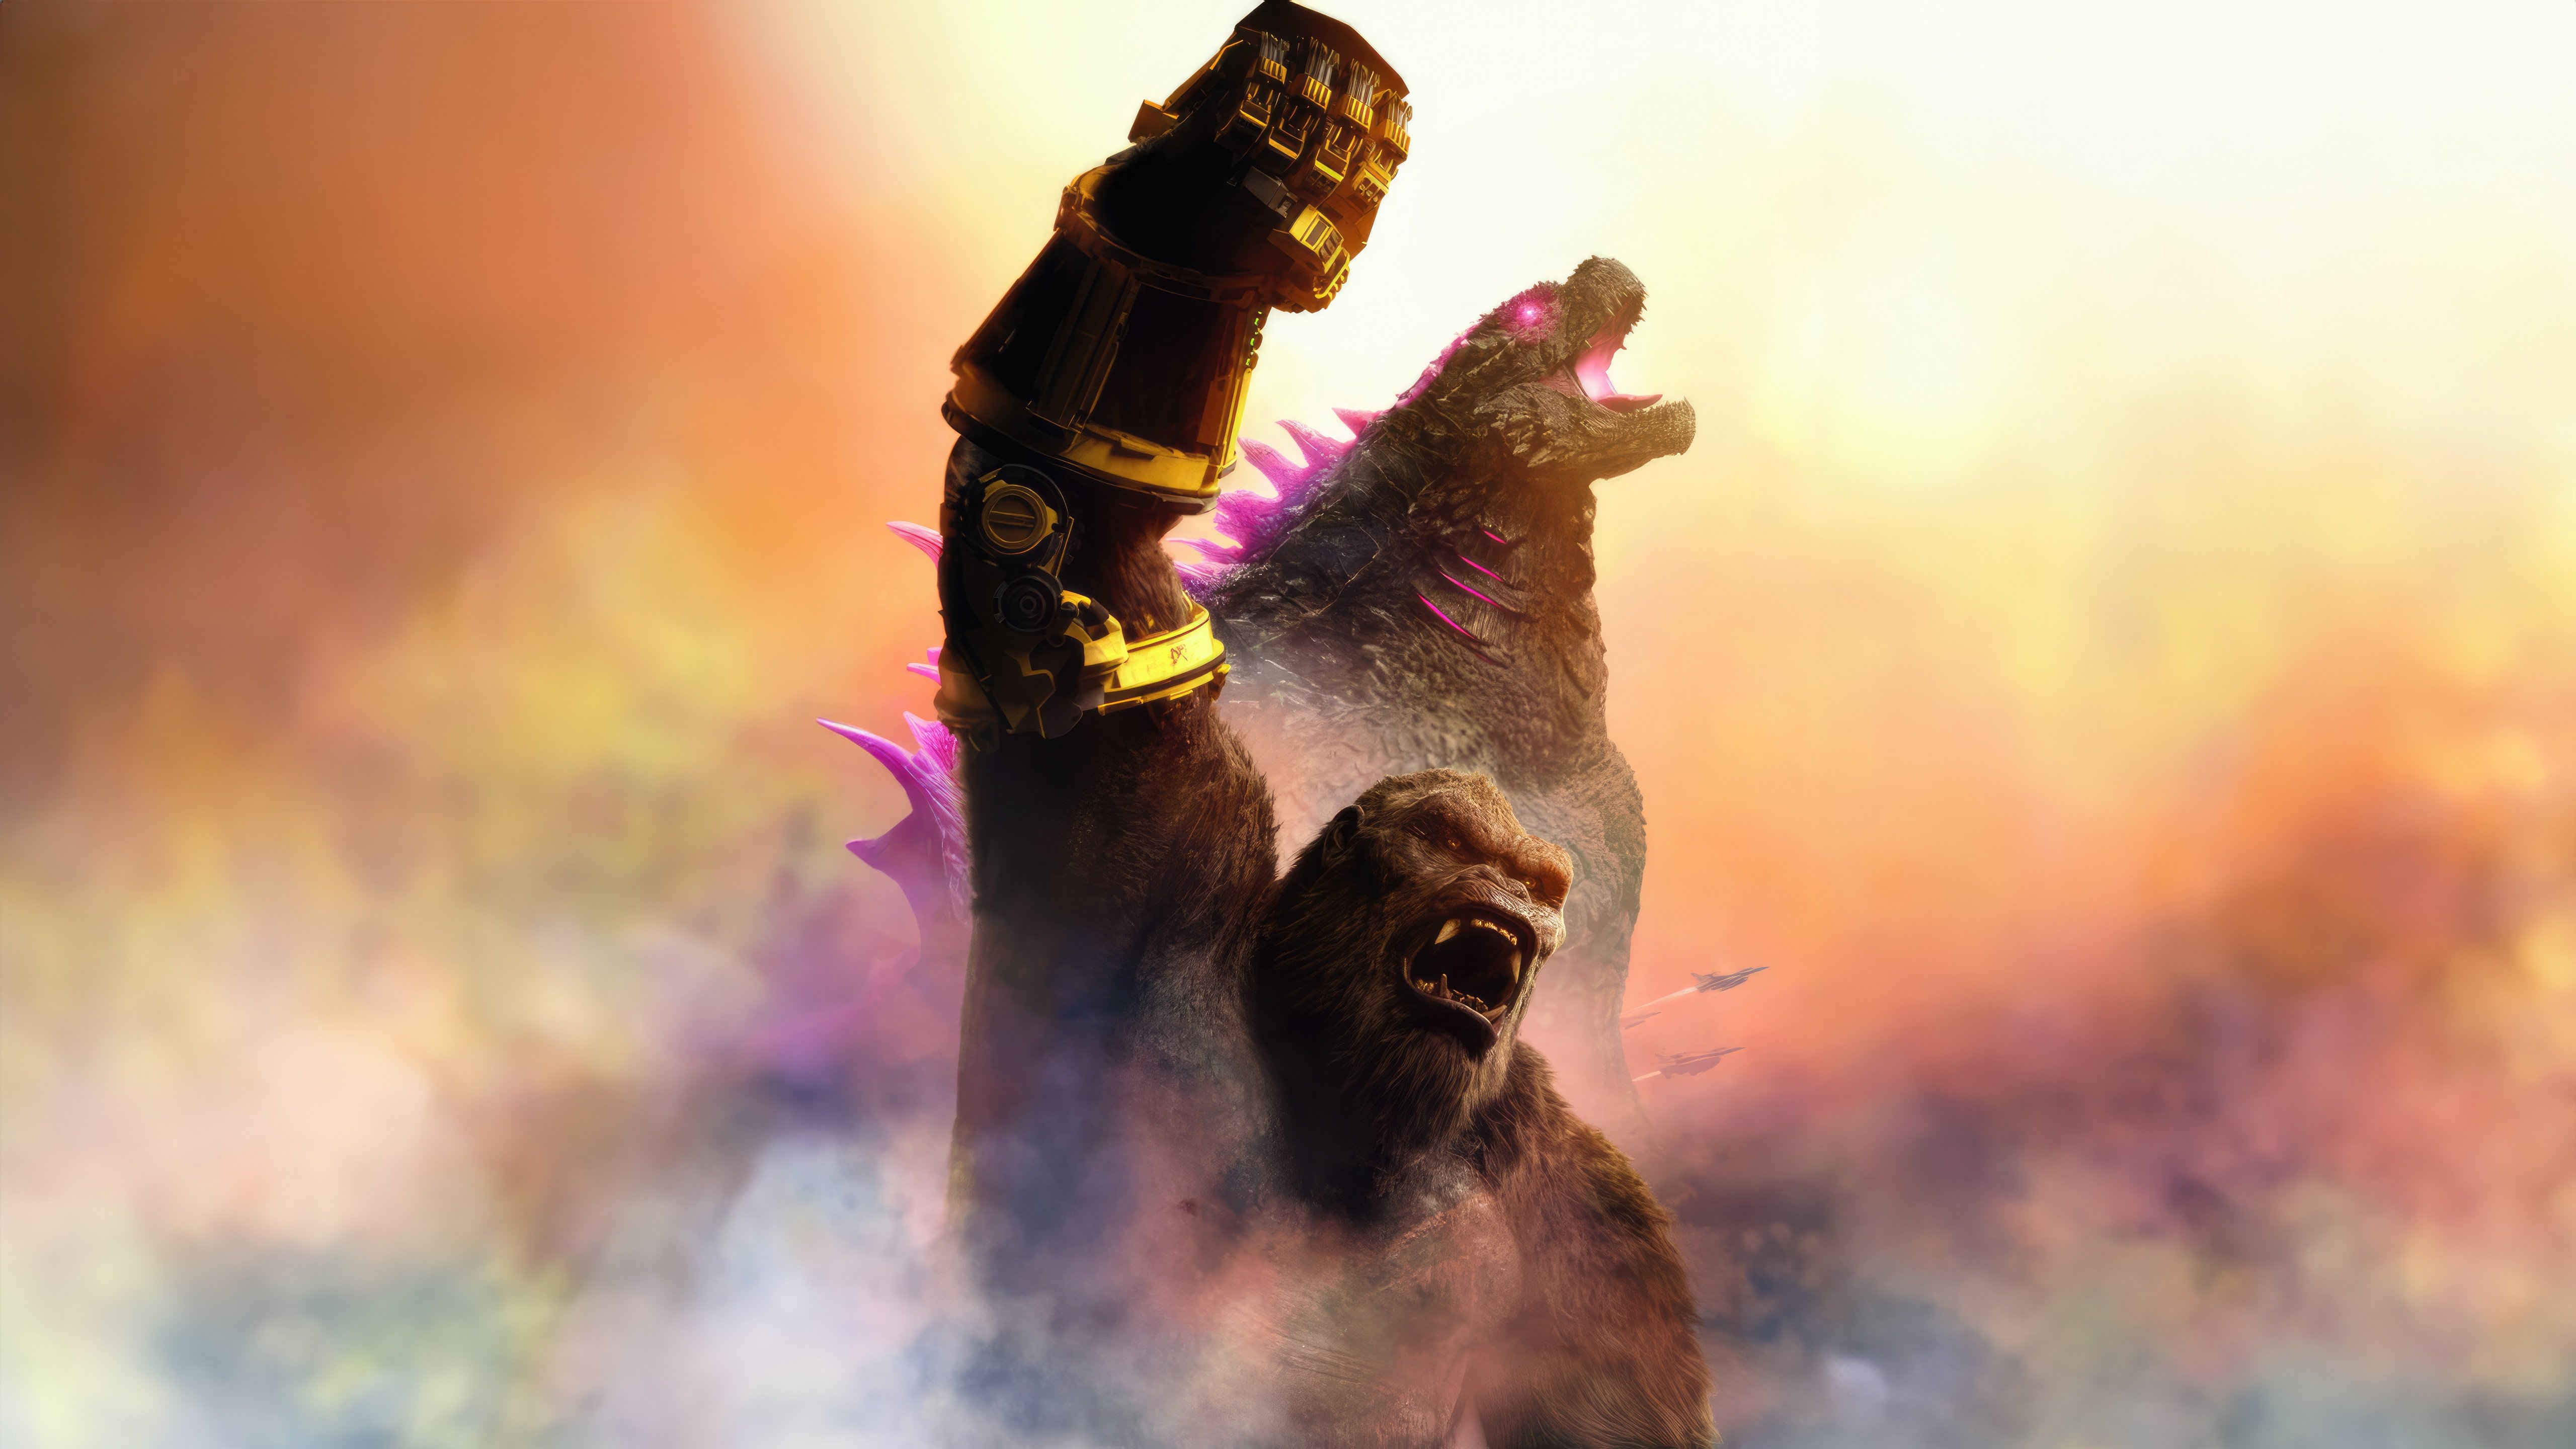 Fondos de pantalla Godzilla X Kong